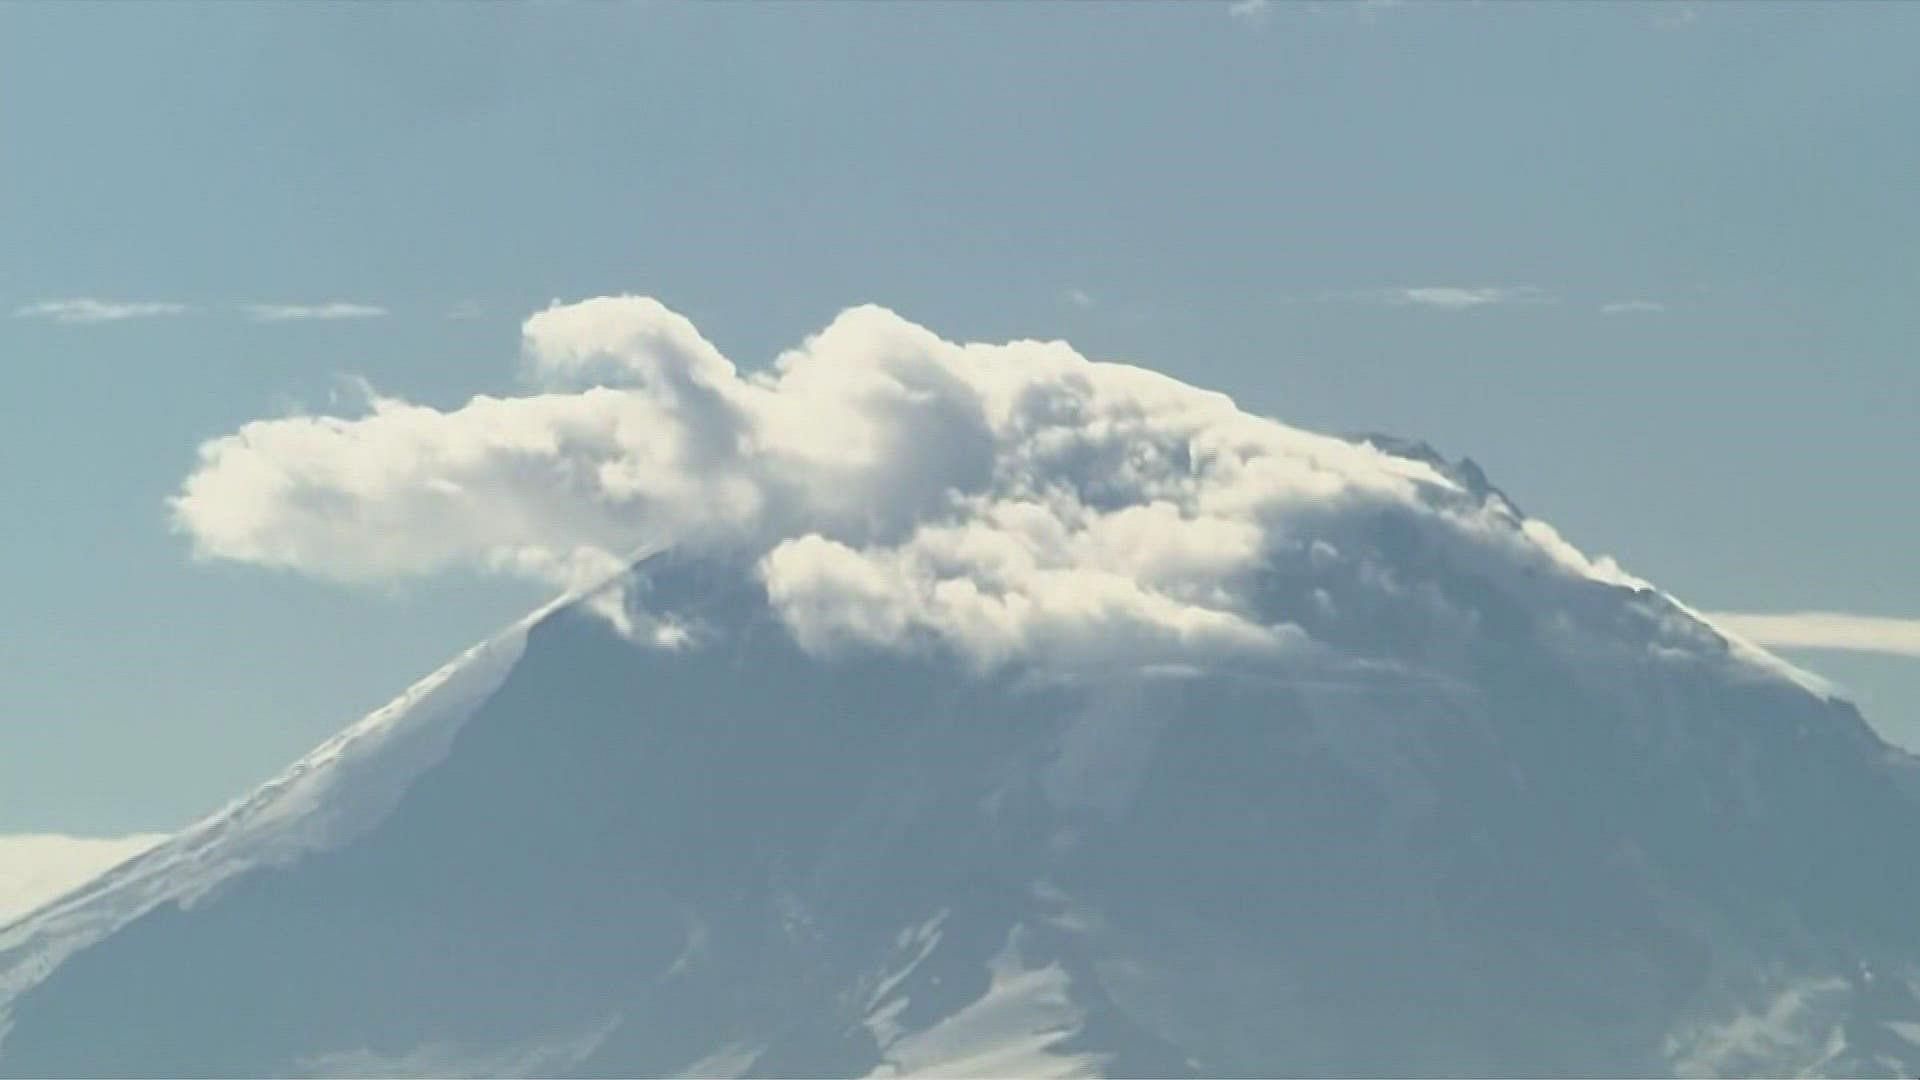 Rumors of Mount Rainier